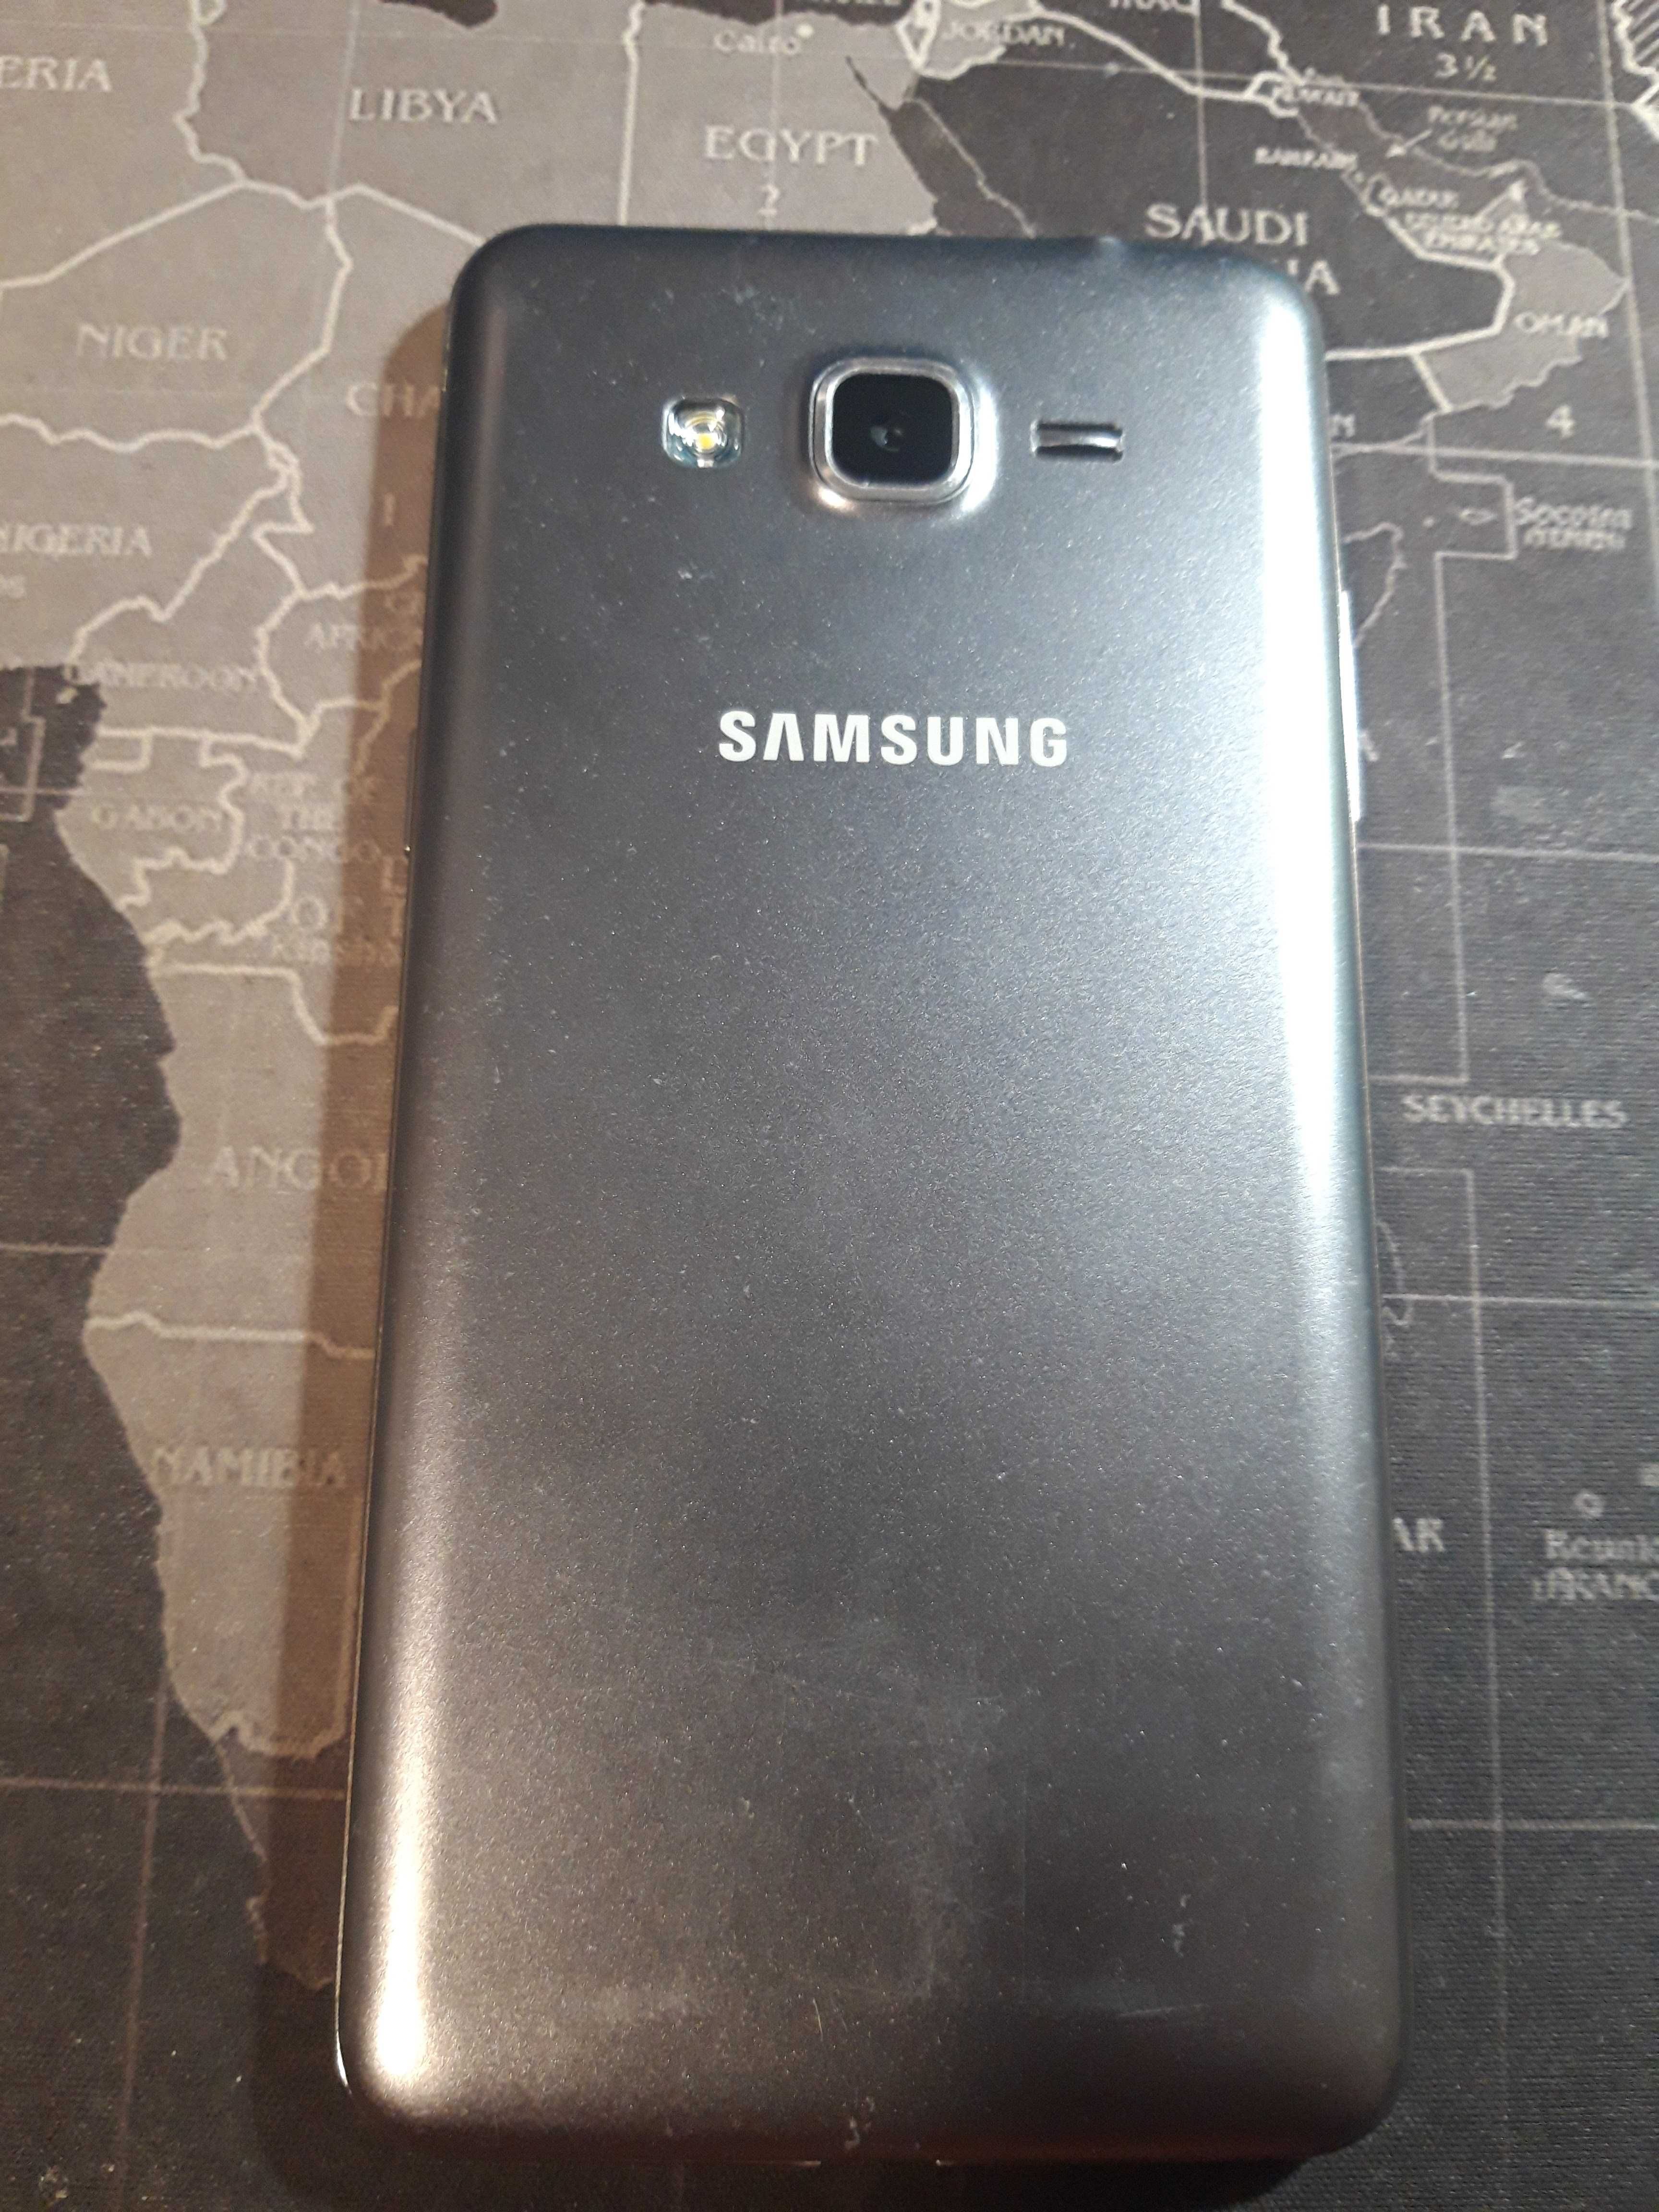 Smartfon Samsung Galaxy Grand Prime